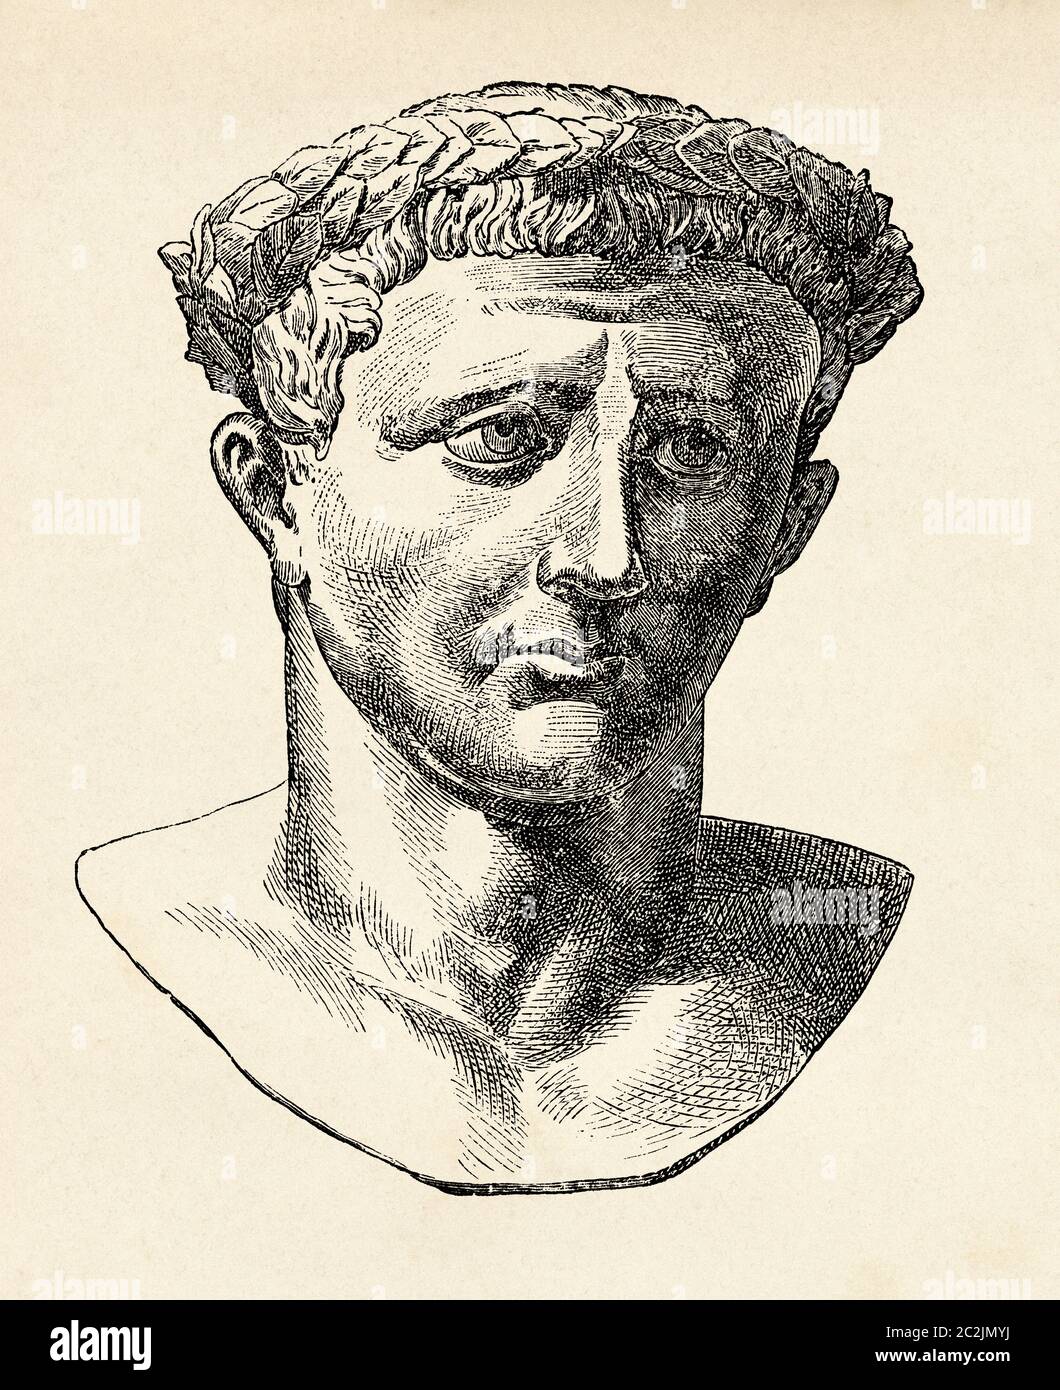 Porträt des römischen Kaisers Claudius, 10 v. Chr. - 54 n. Chr., altes Rom. Alte Illustration aus dem 19. Jahrhundert, El Mundo Ilustrado 1880 Stockfoto